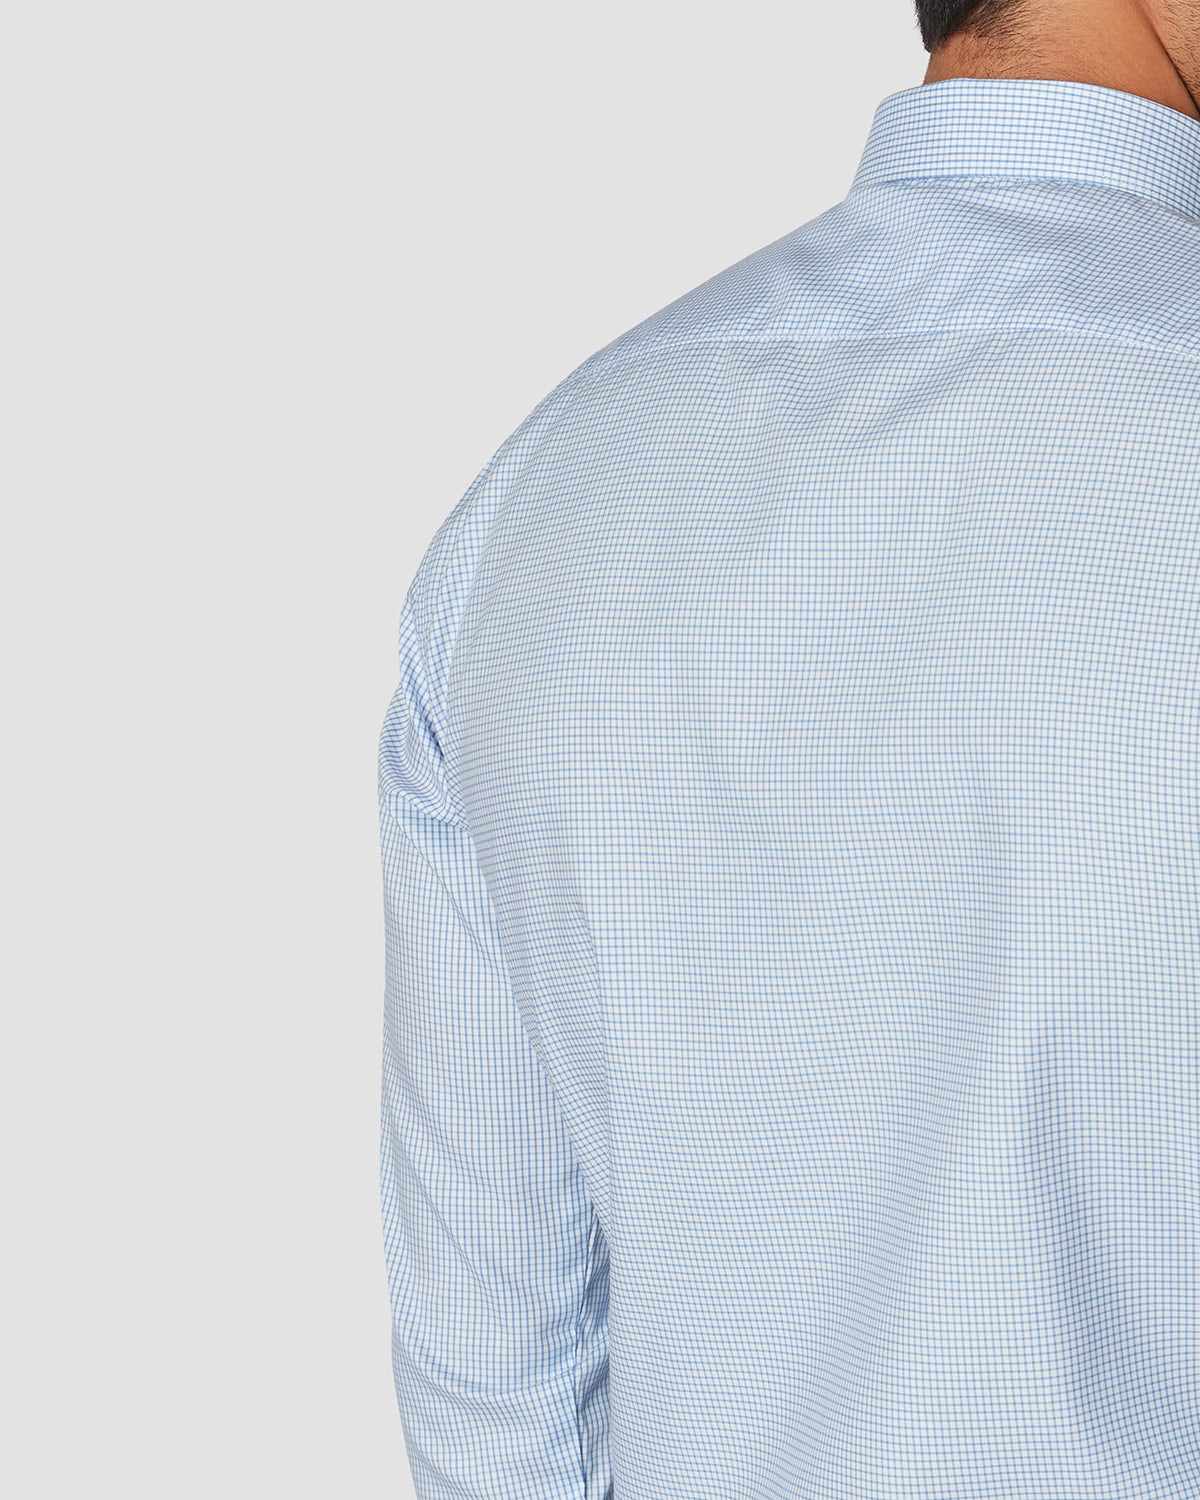 Bombay Shirt Company - Thomas Mason Glacier Grid Wrinkle Resistant Shirt